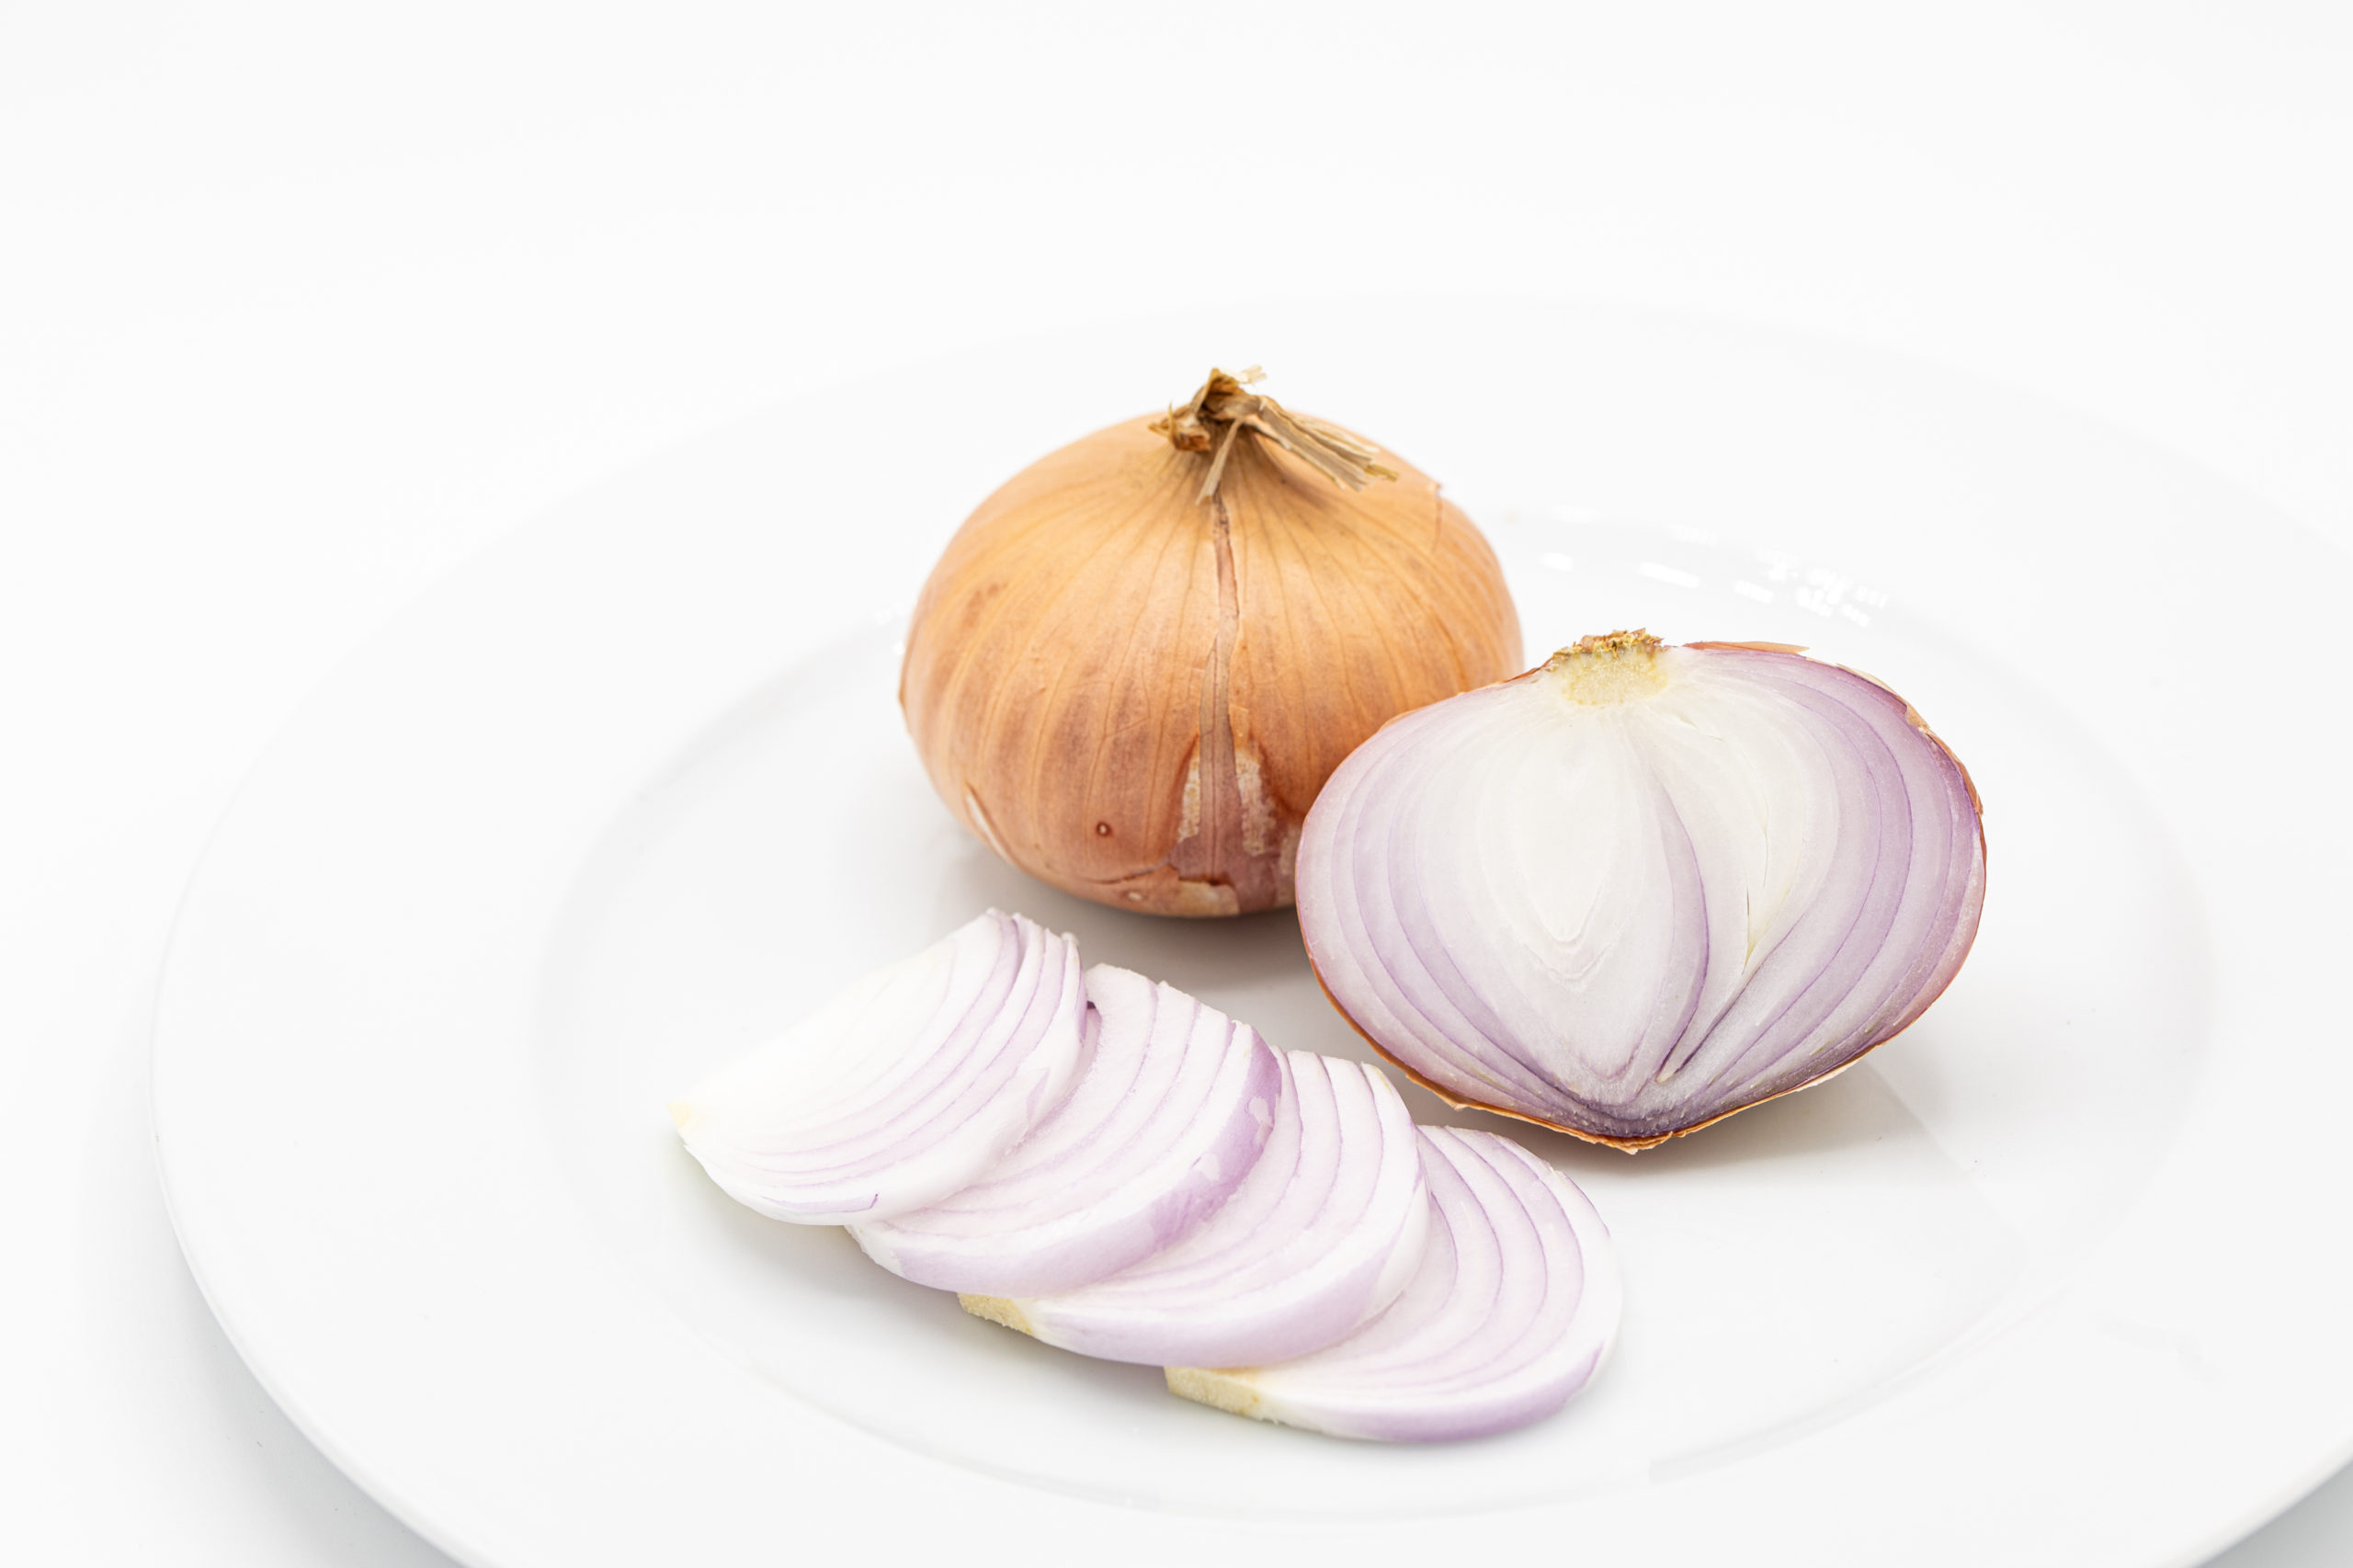 emporda Product- Figueres onion - Empordaturisme